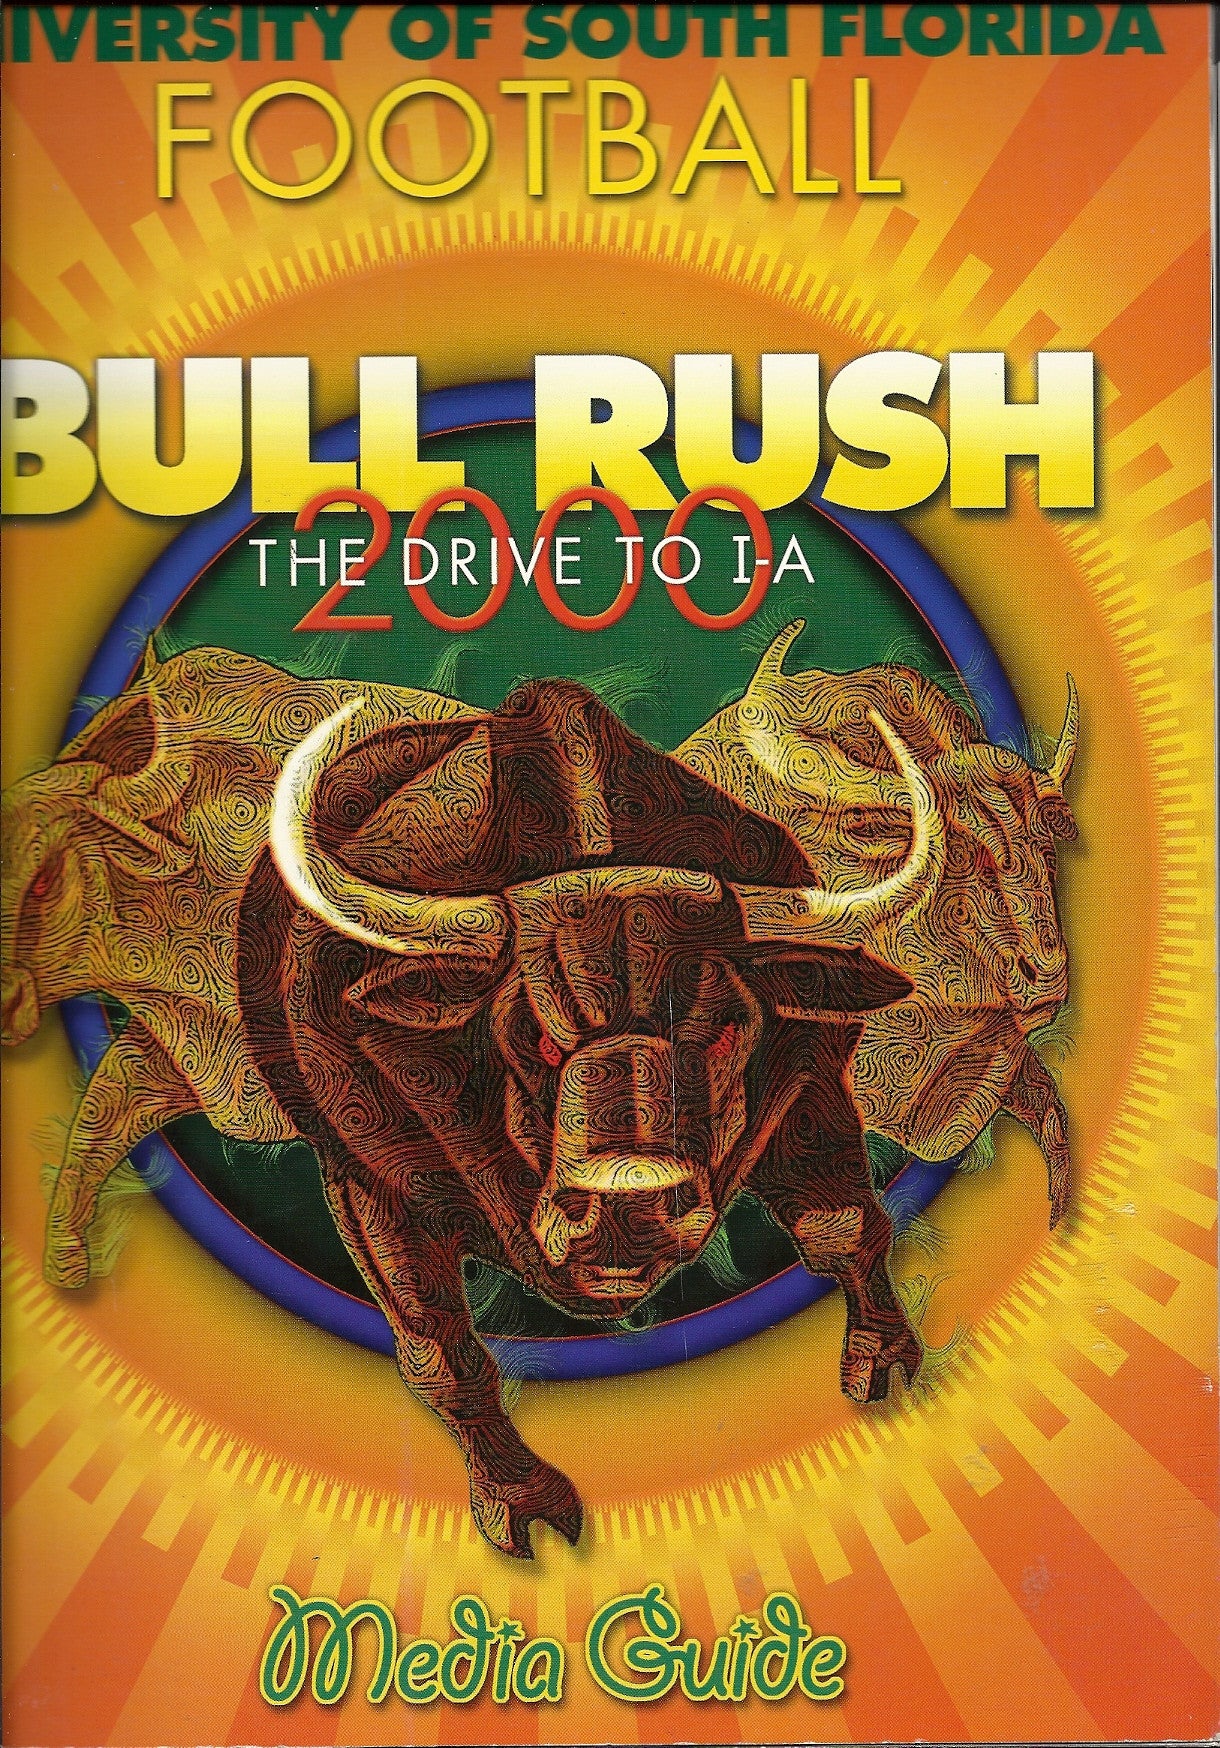 2000 USF Football Bull Rush Media Guide